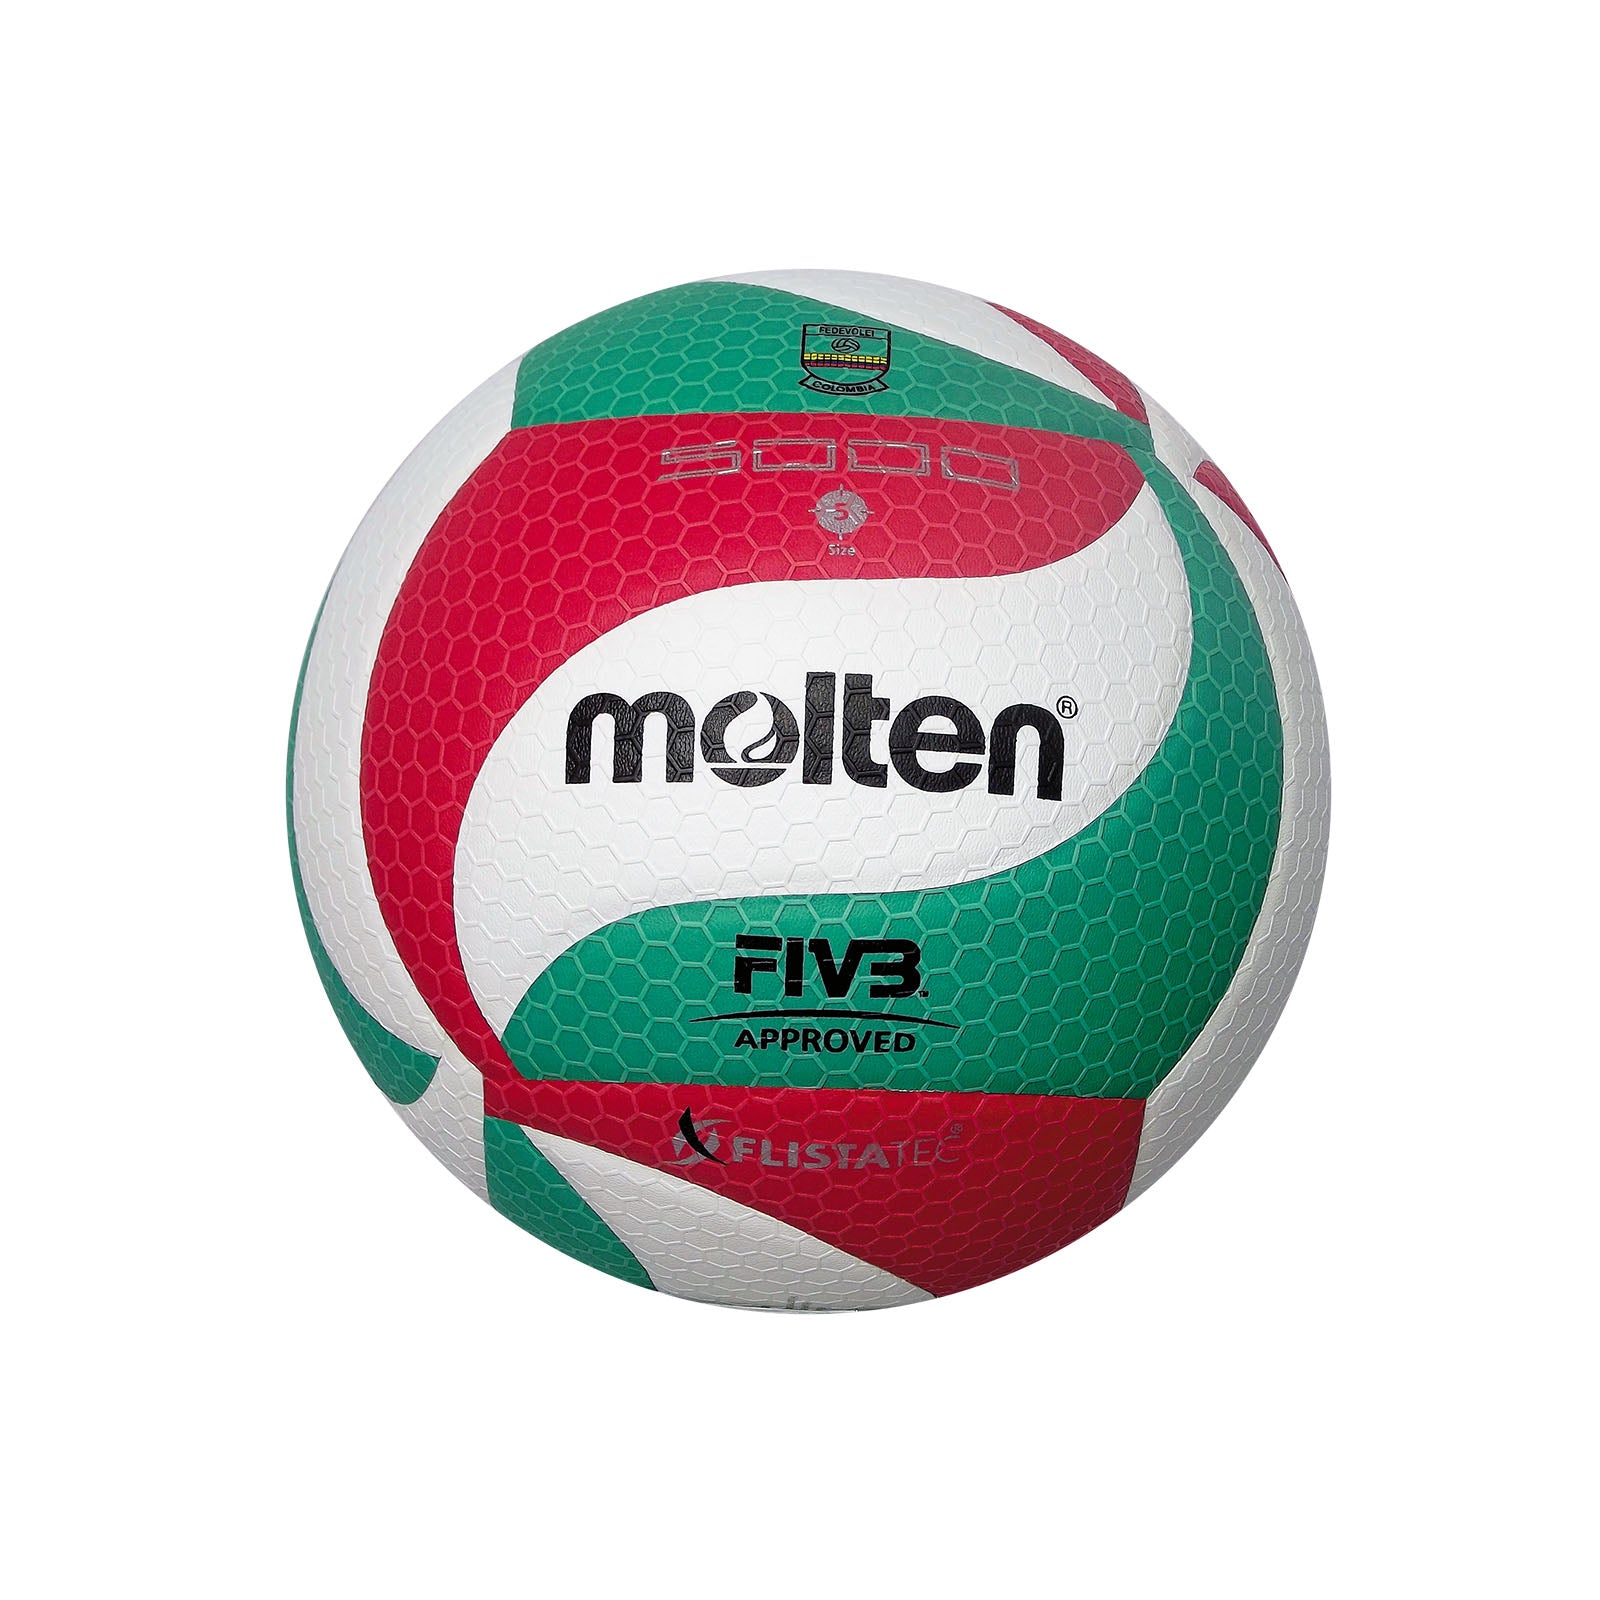 Balon De Voleibol Pelota